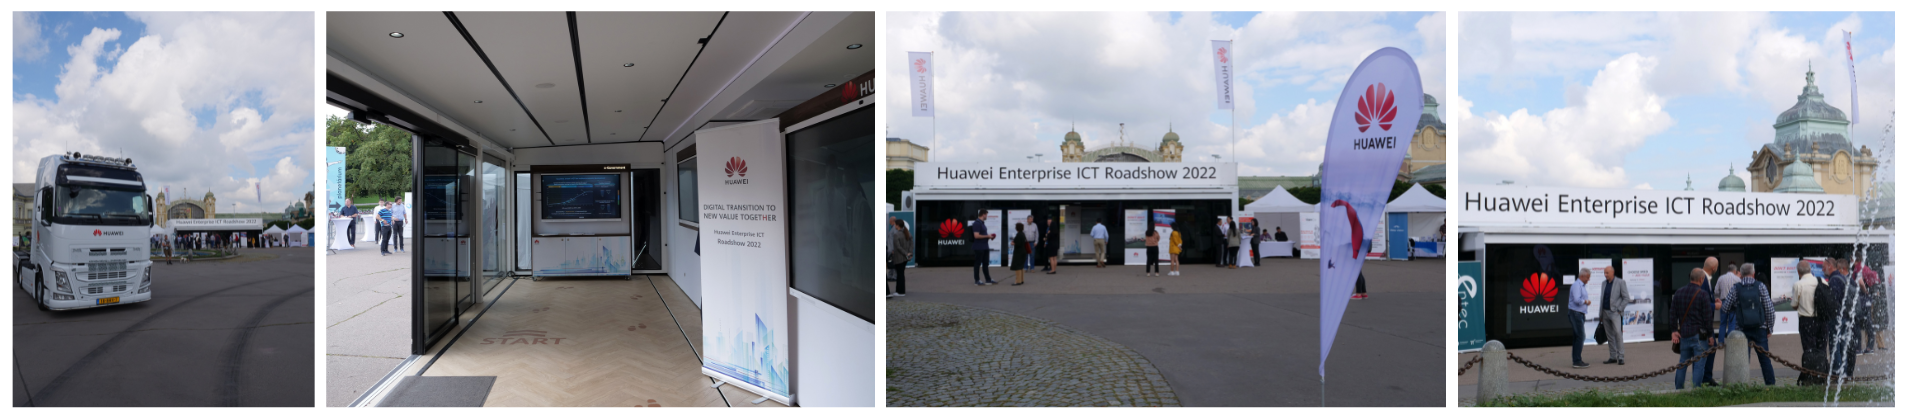 Huawei ICT Roadshow Prague 2022